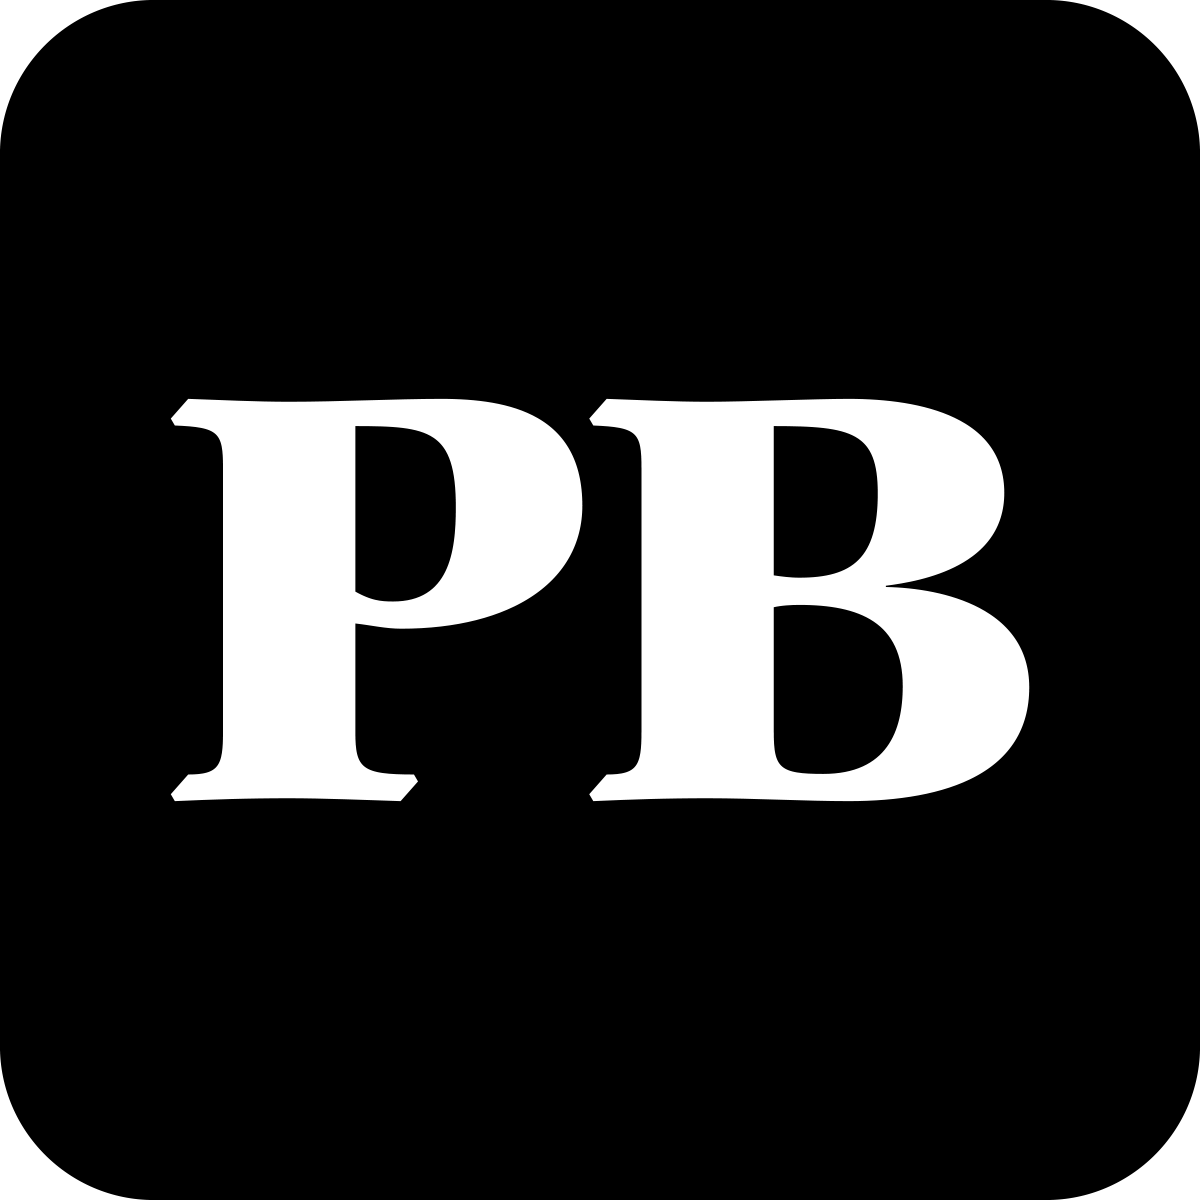 Point Blank Logo